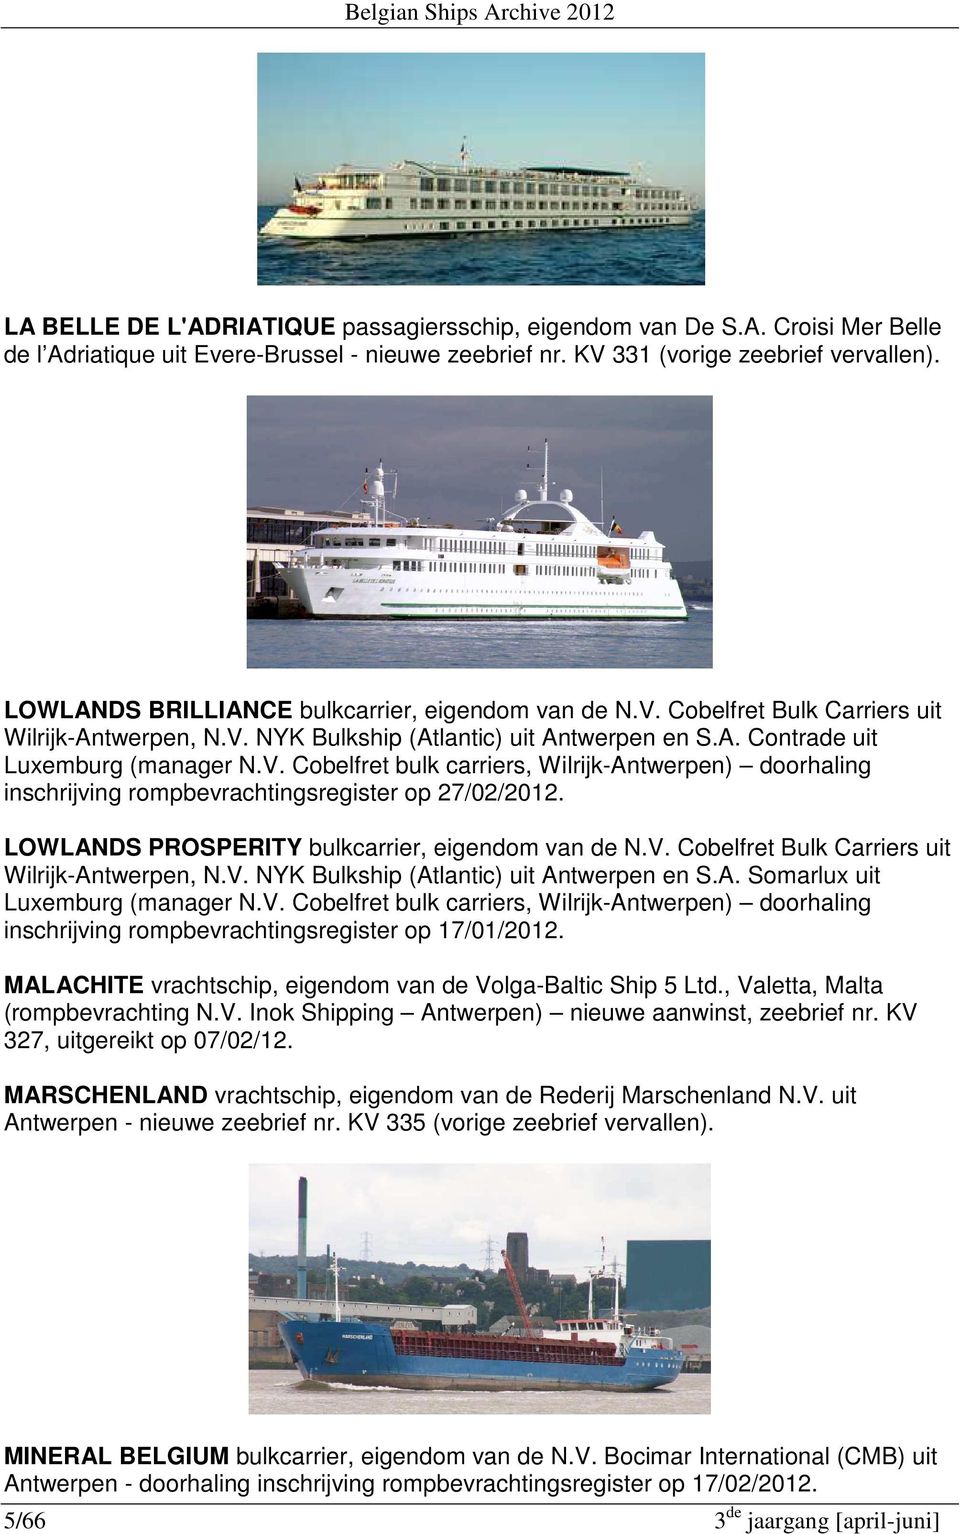 LOWLANDS PROSPERITY bulkcarrier, eigendom van de N.V. Cobelfret Bulk Carriers uit Wilrijk-Antwerpen, N.V. NYK Bulkship (Atlantic) uit Antwerpen en S.A. Somarlux uit Luxemburg (manager N.V. Cobelfret bulk carriers, Wilrijk-Antwerpen) doorhaling inschrijving rompbevrachtingsregister op 17/01/2012.